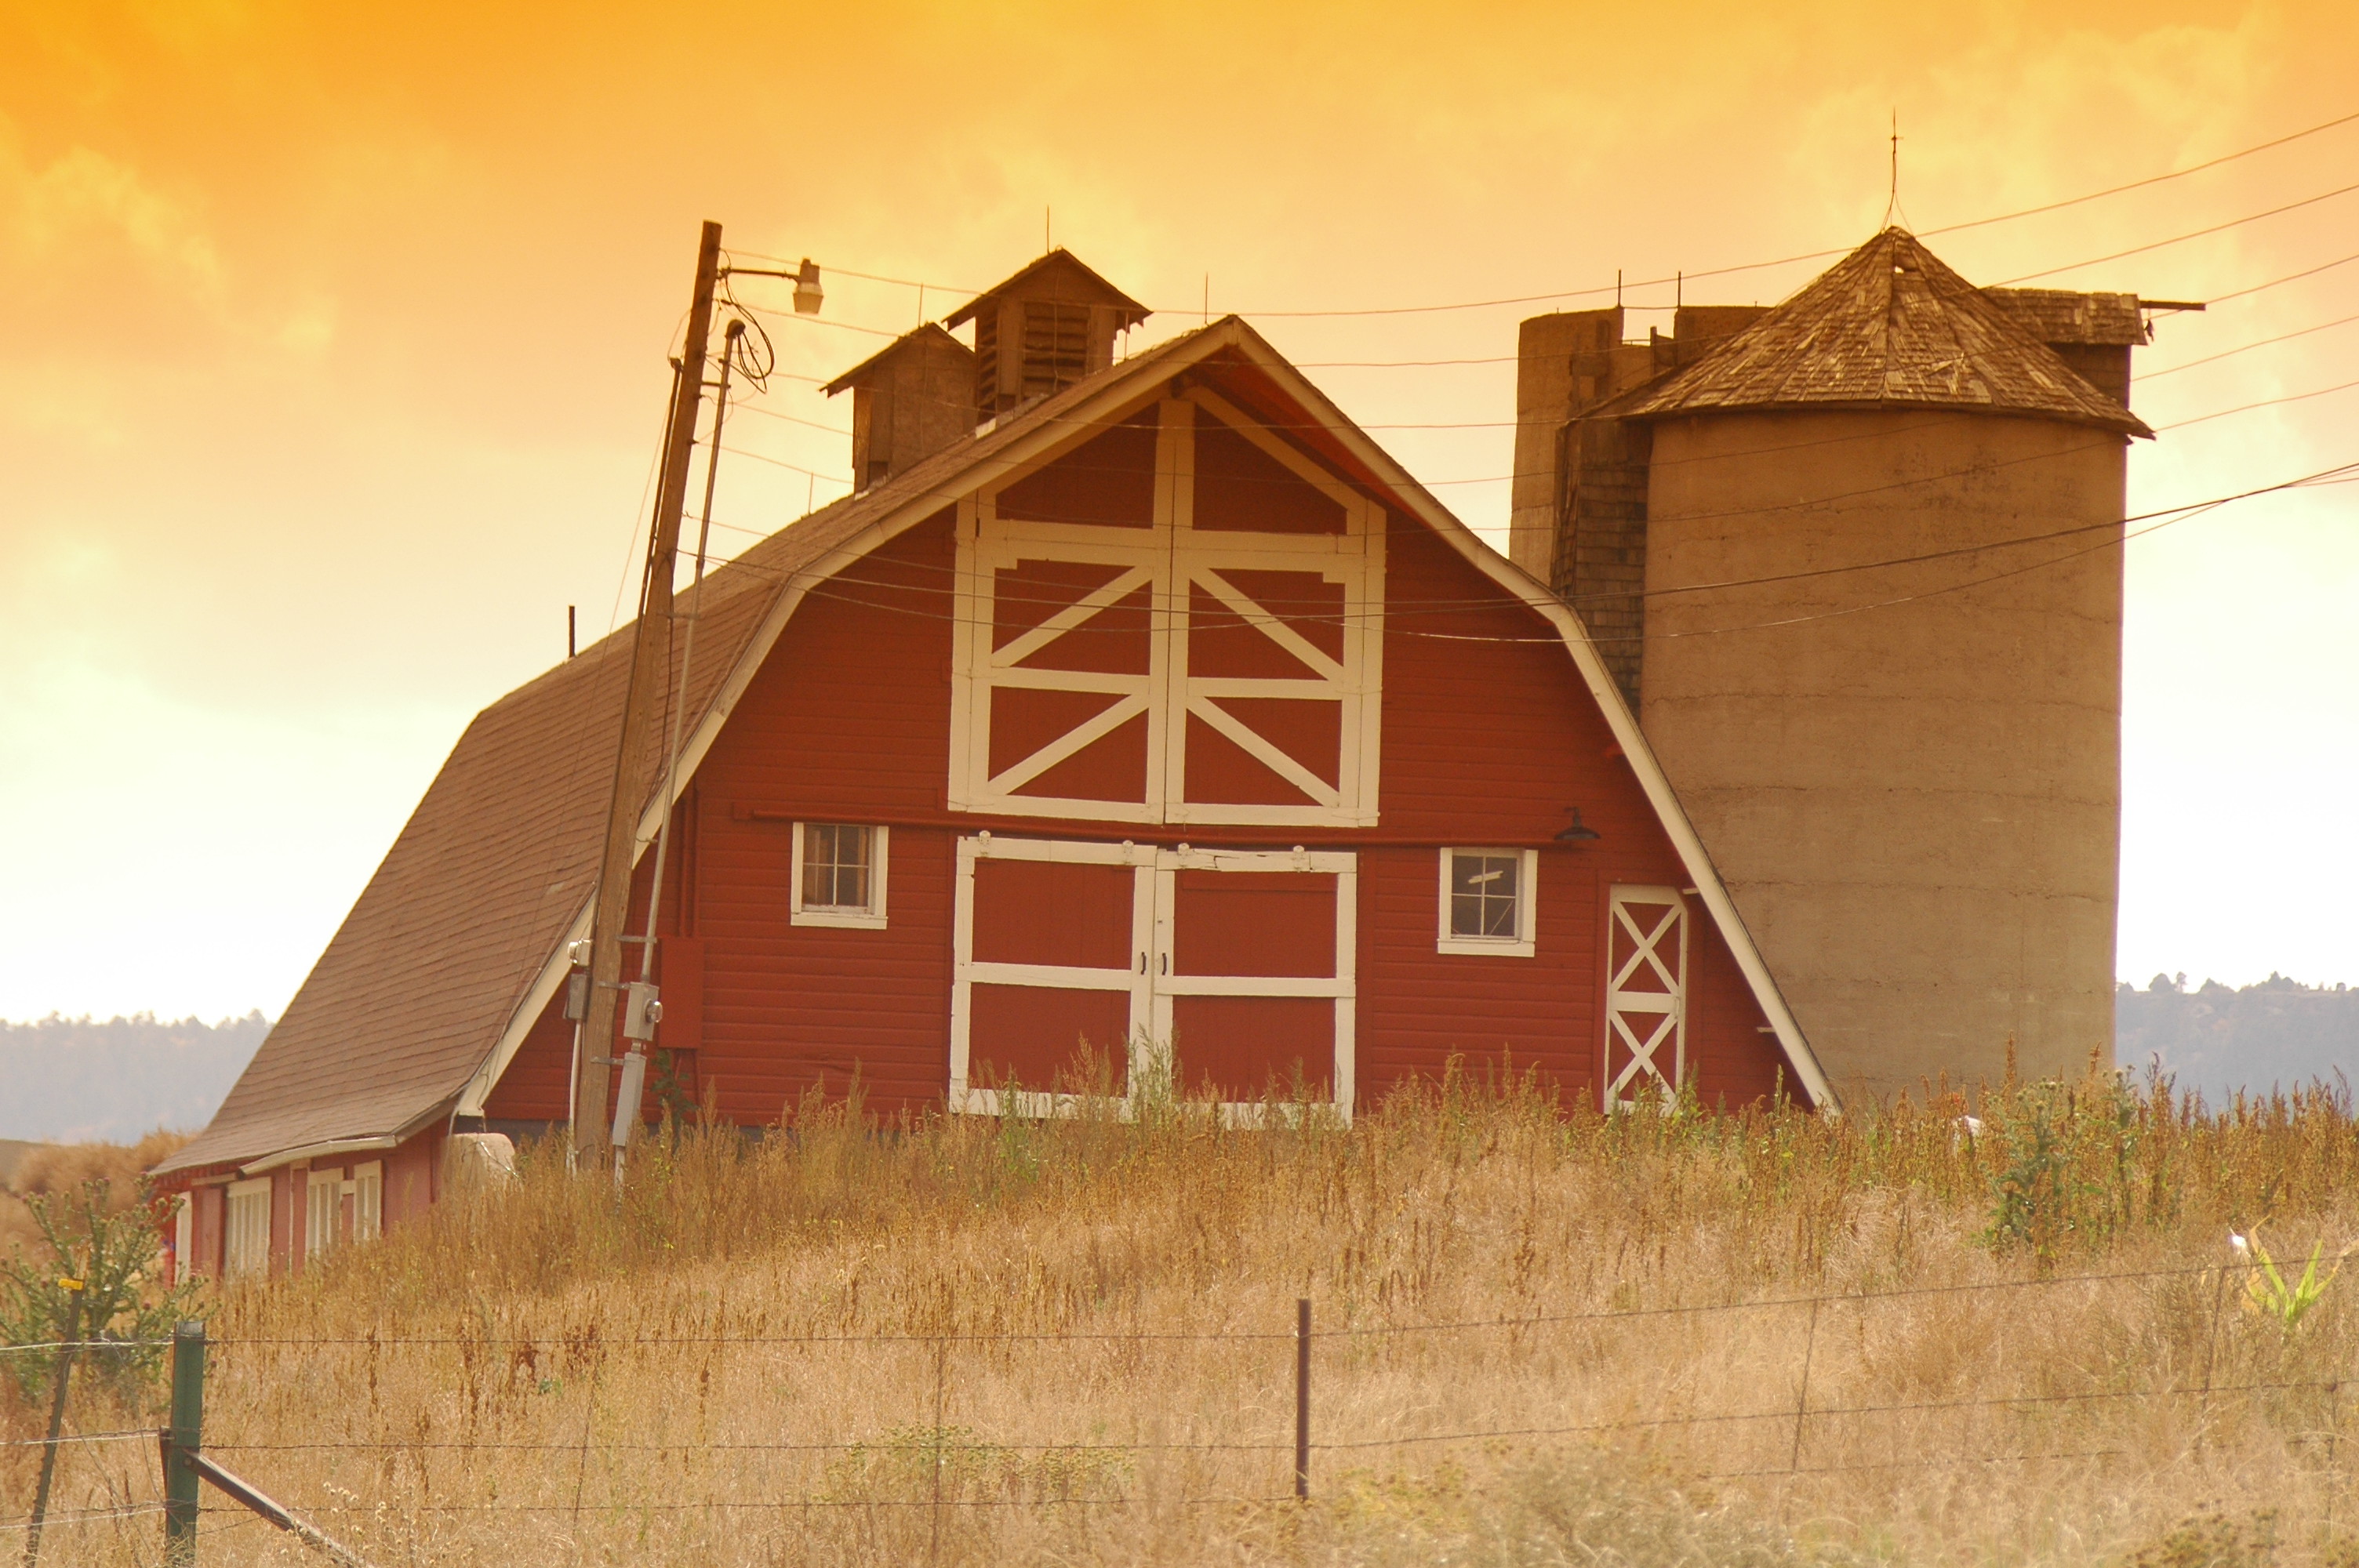 Old Red Barn and Silo, America, Americana, Barn, Farm, HQ Photo